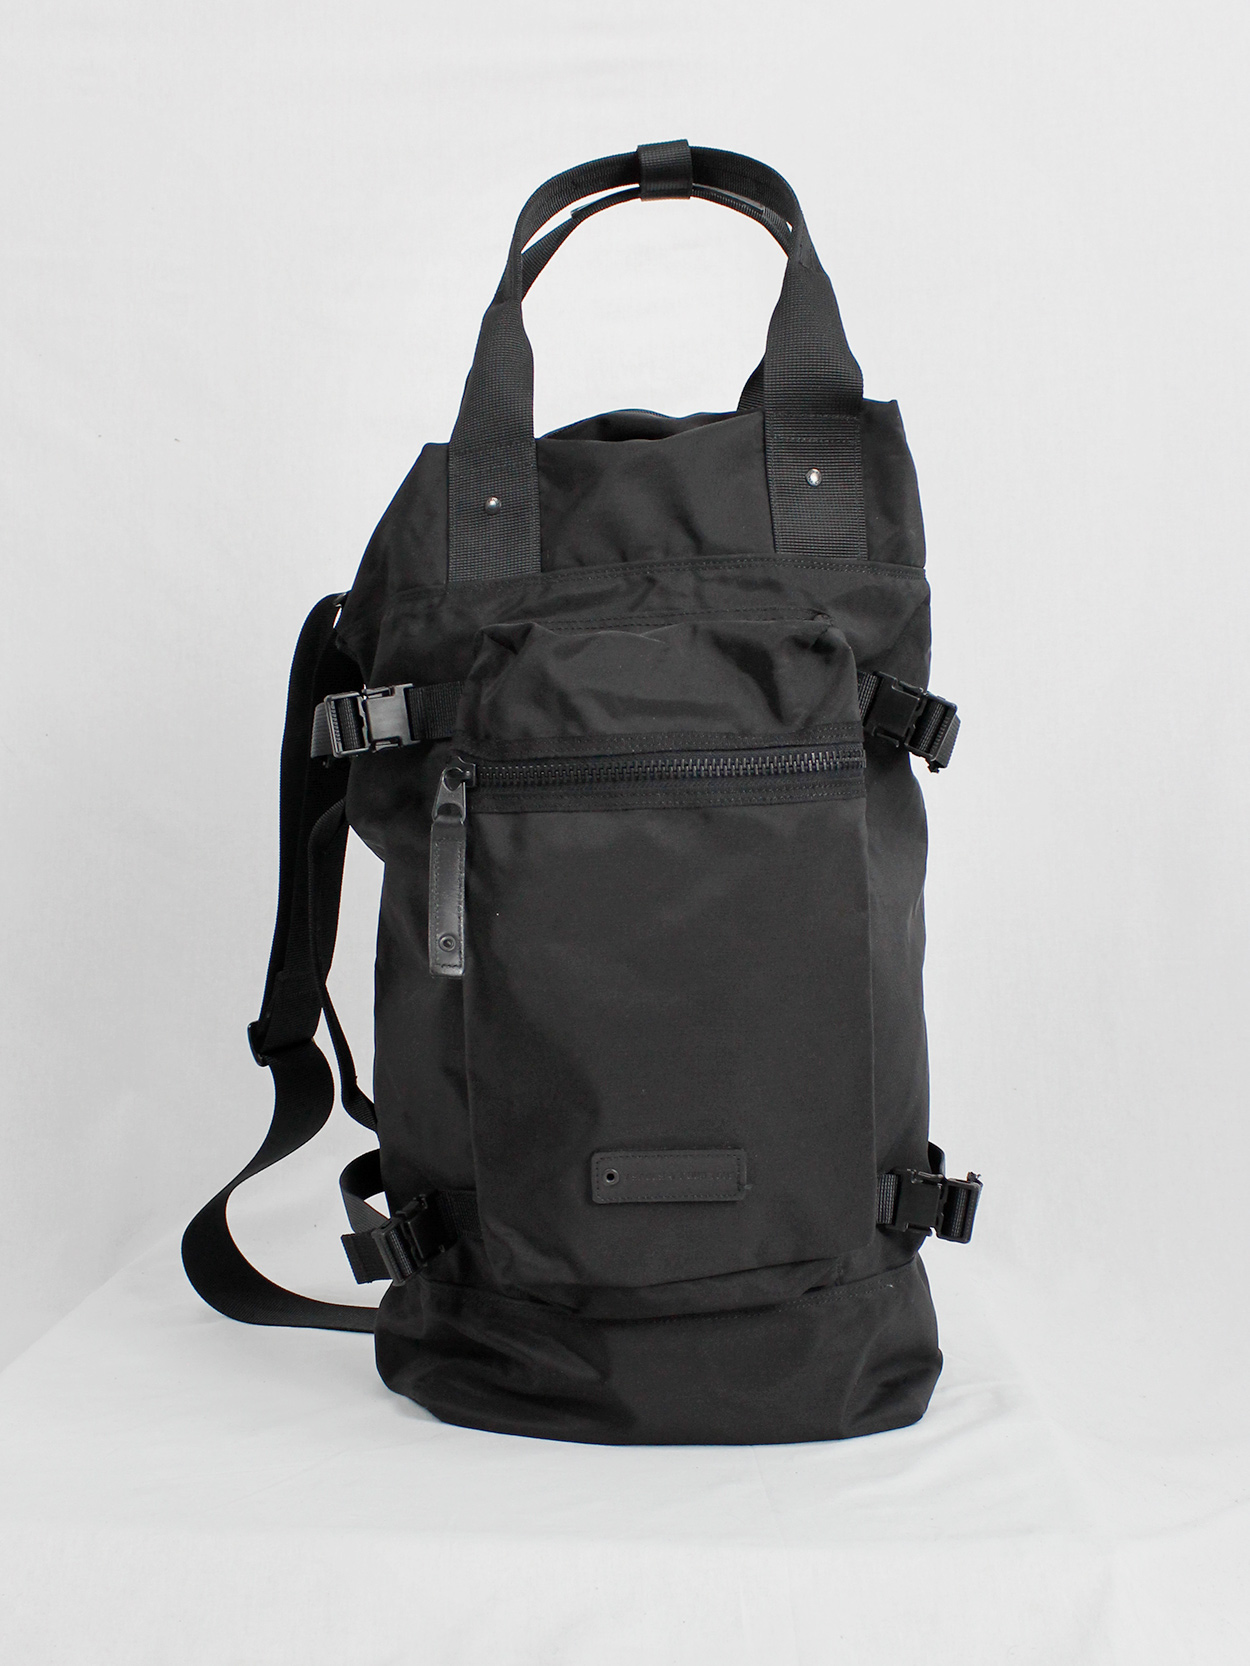 yohji yamamoto yACCS Pour Tous black duffle bag with utility straps 90s (5)